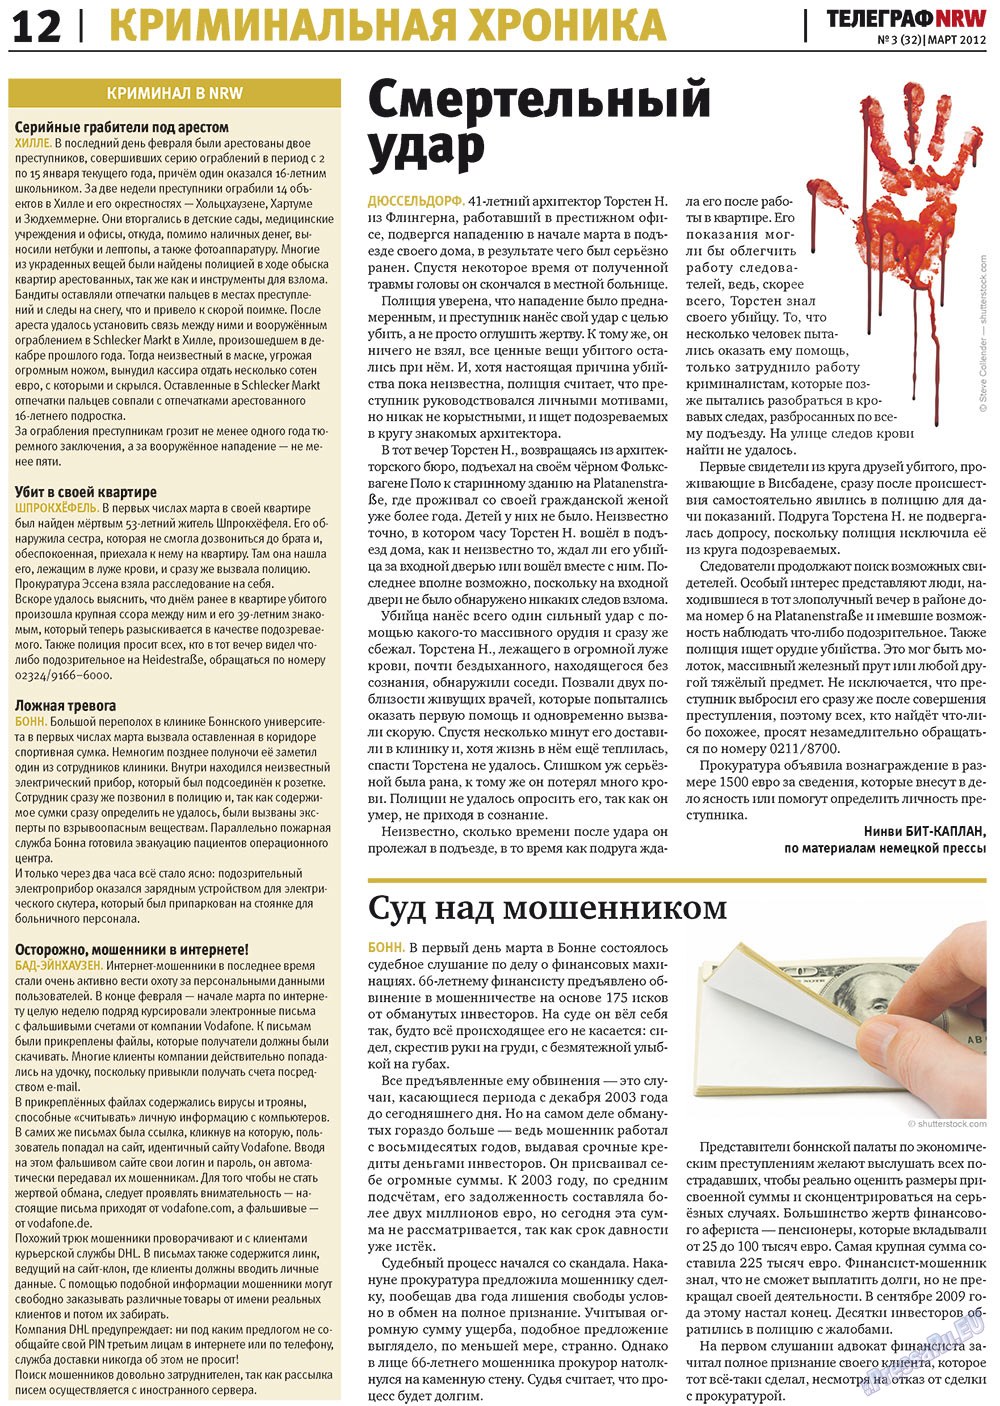 Телеграф NRW, газета. 2012 №3 стр.12